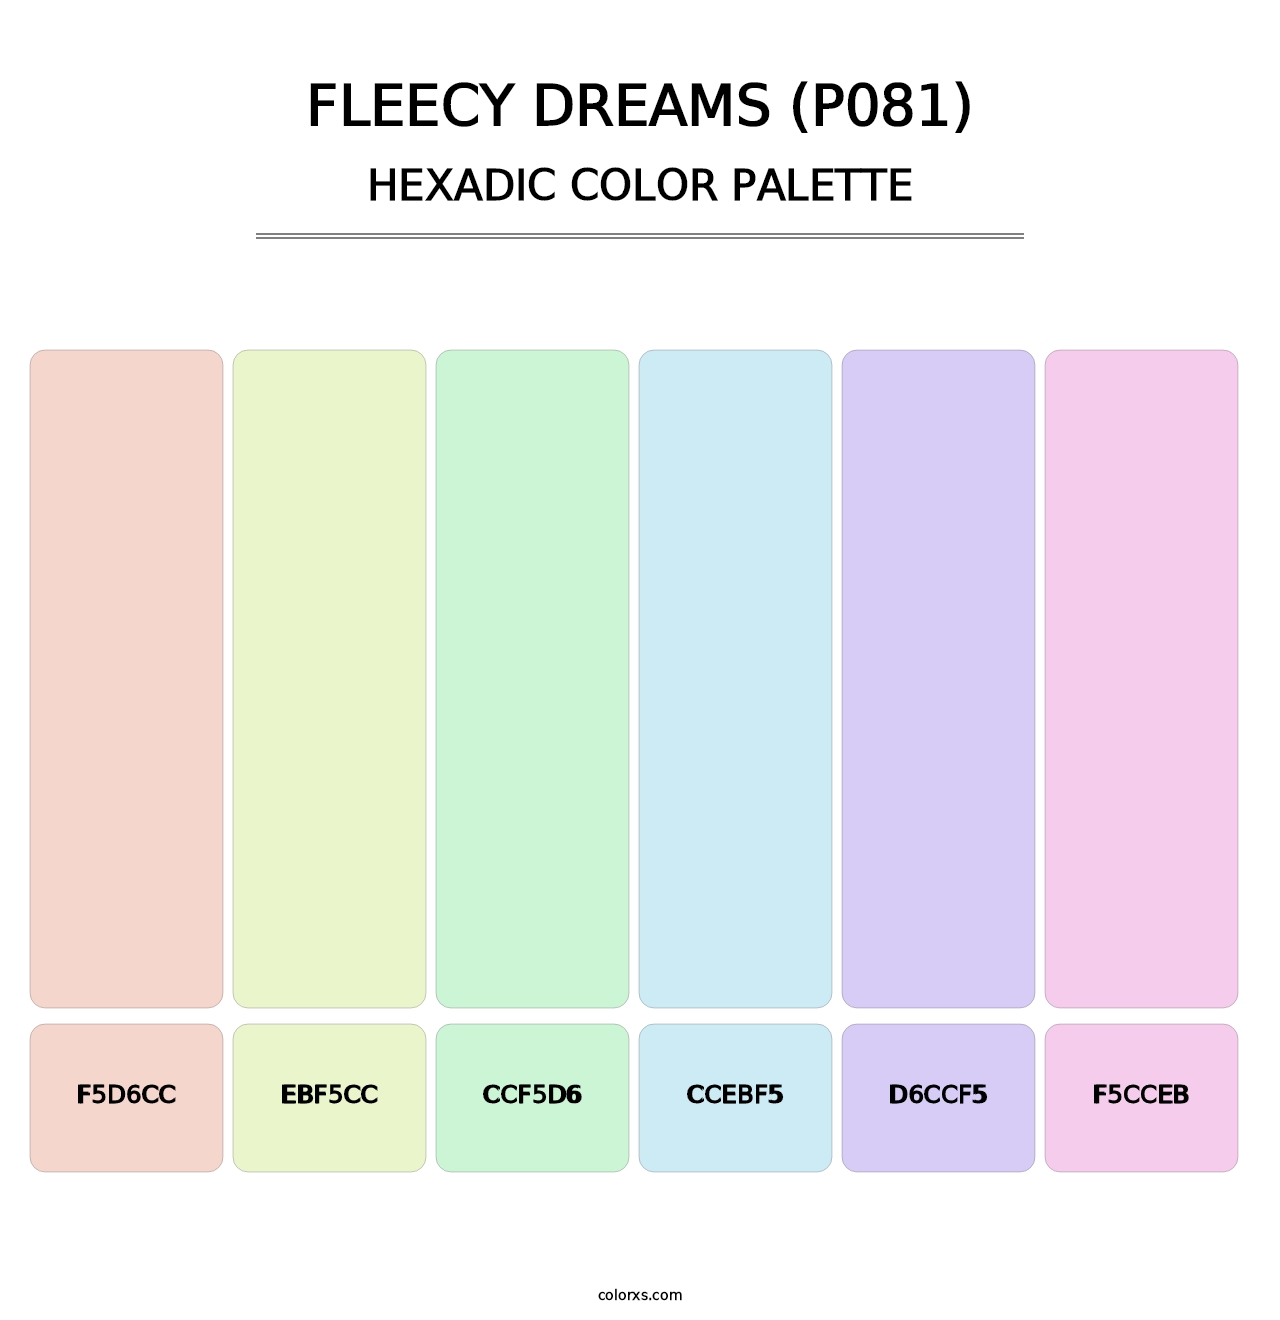 Fleecy Dreams (P081) - Hexadic Color Palette